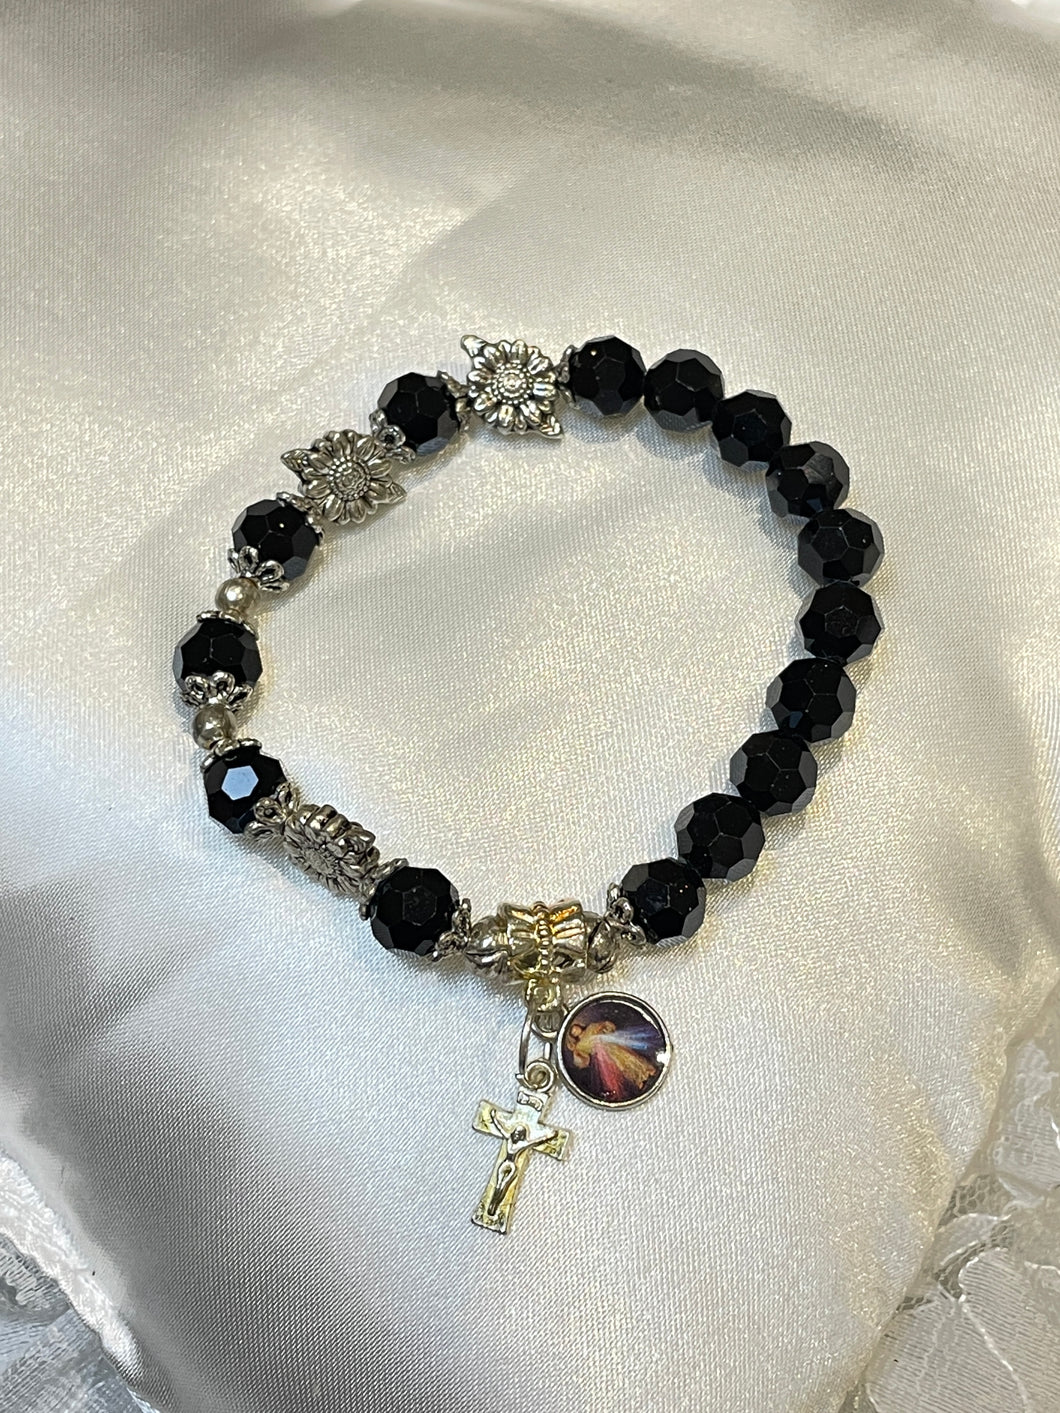 Black Gemstone Rosary Bracelet with Divine Mercy Image Charm